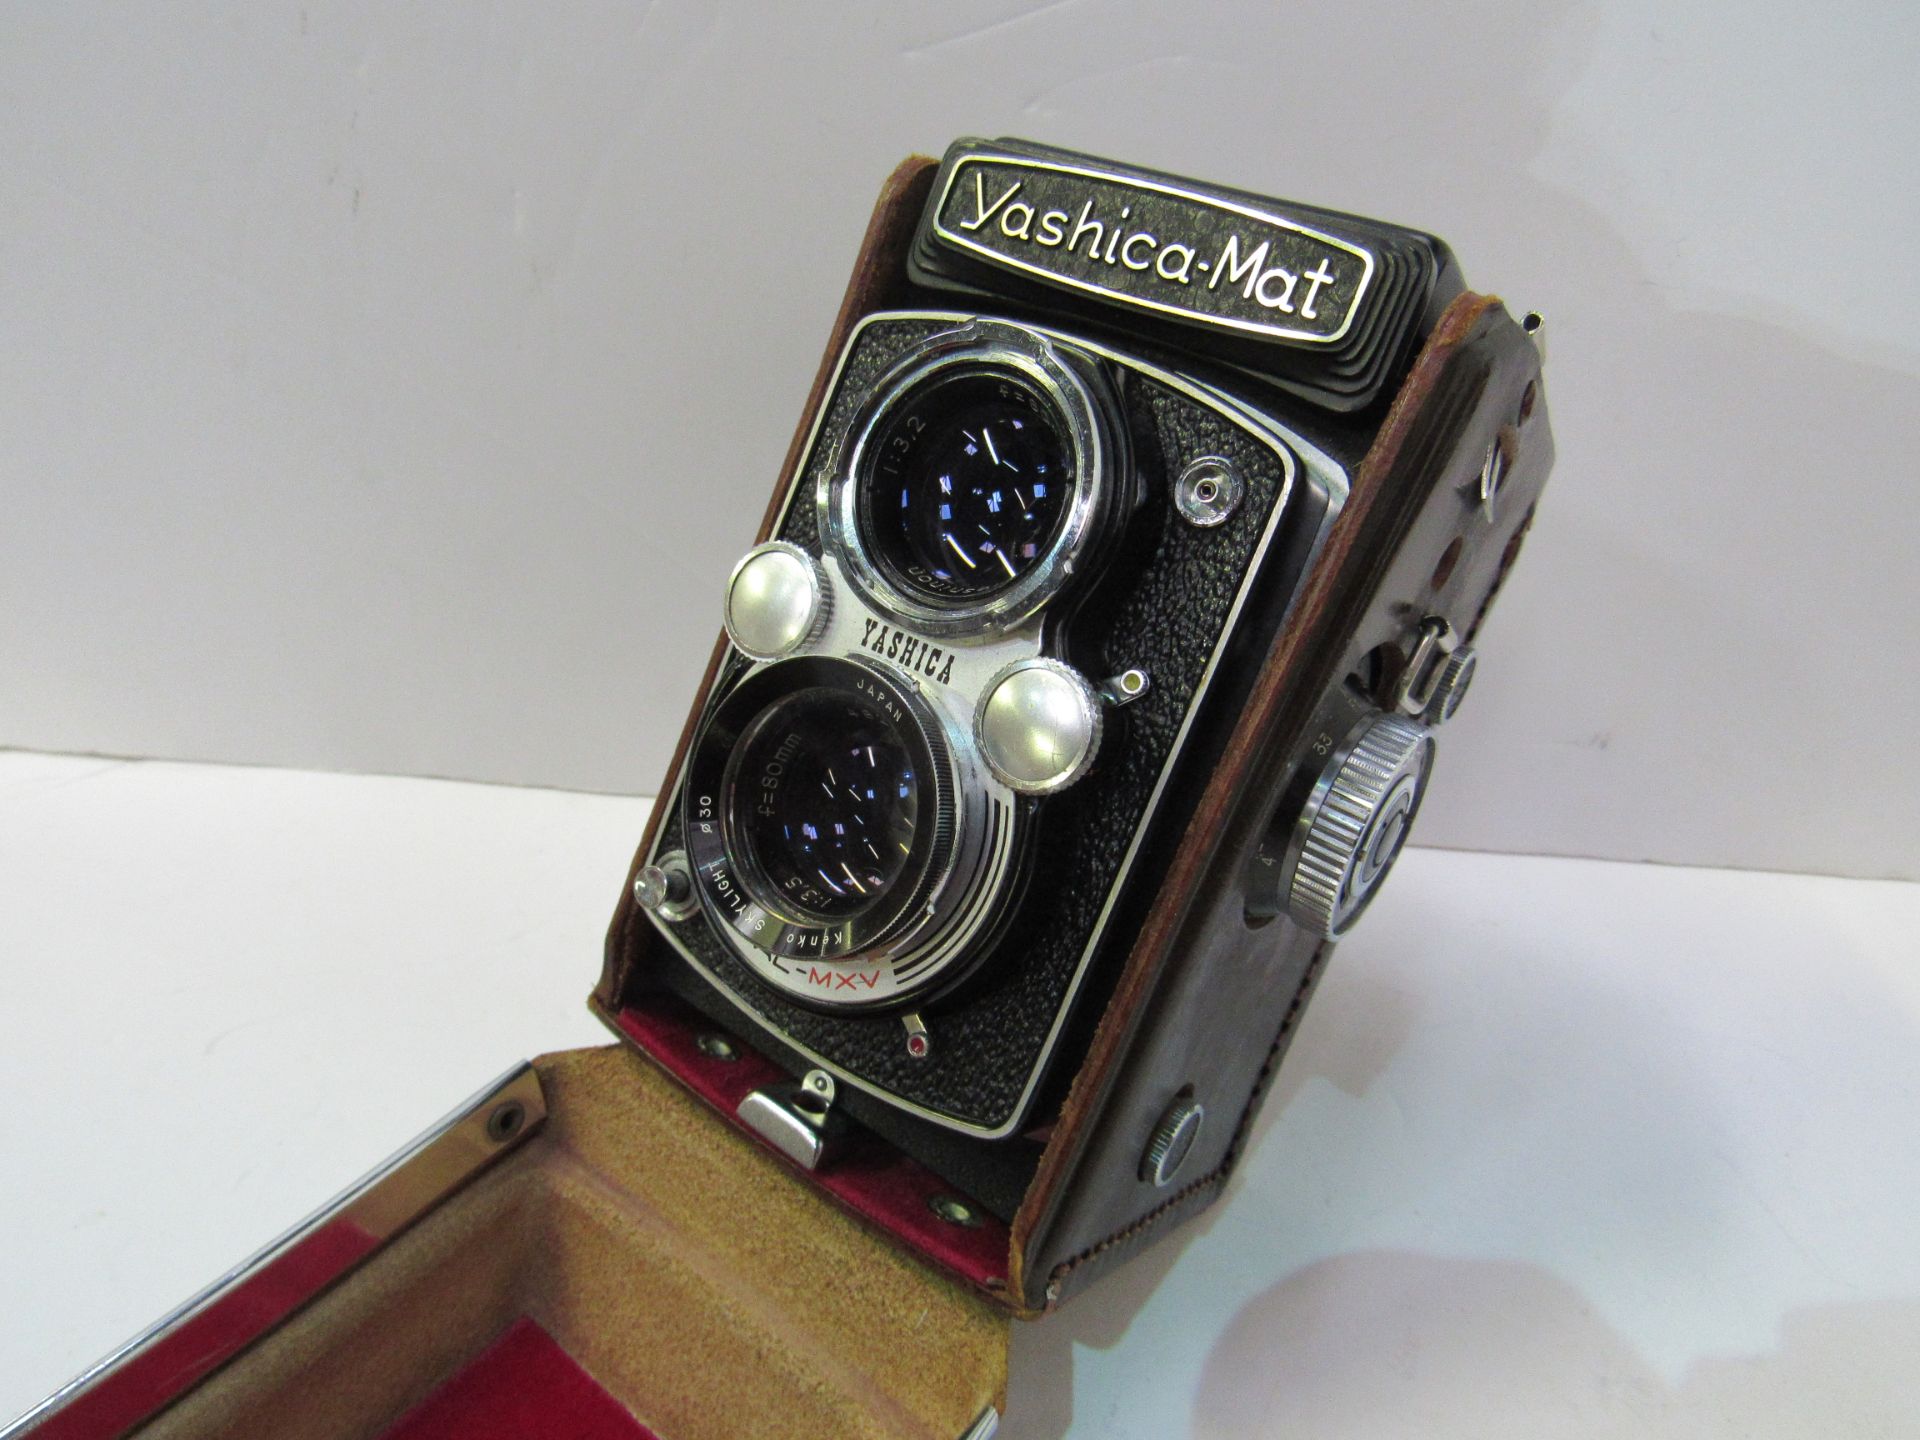 Yashica-Mat Copal-MXV cine camera. Estimate £40-60.